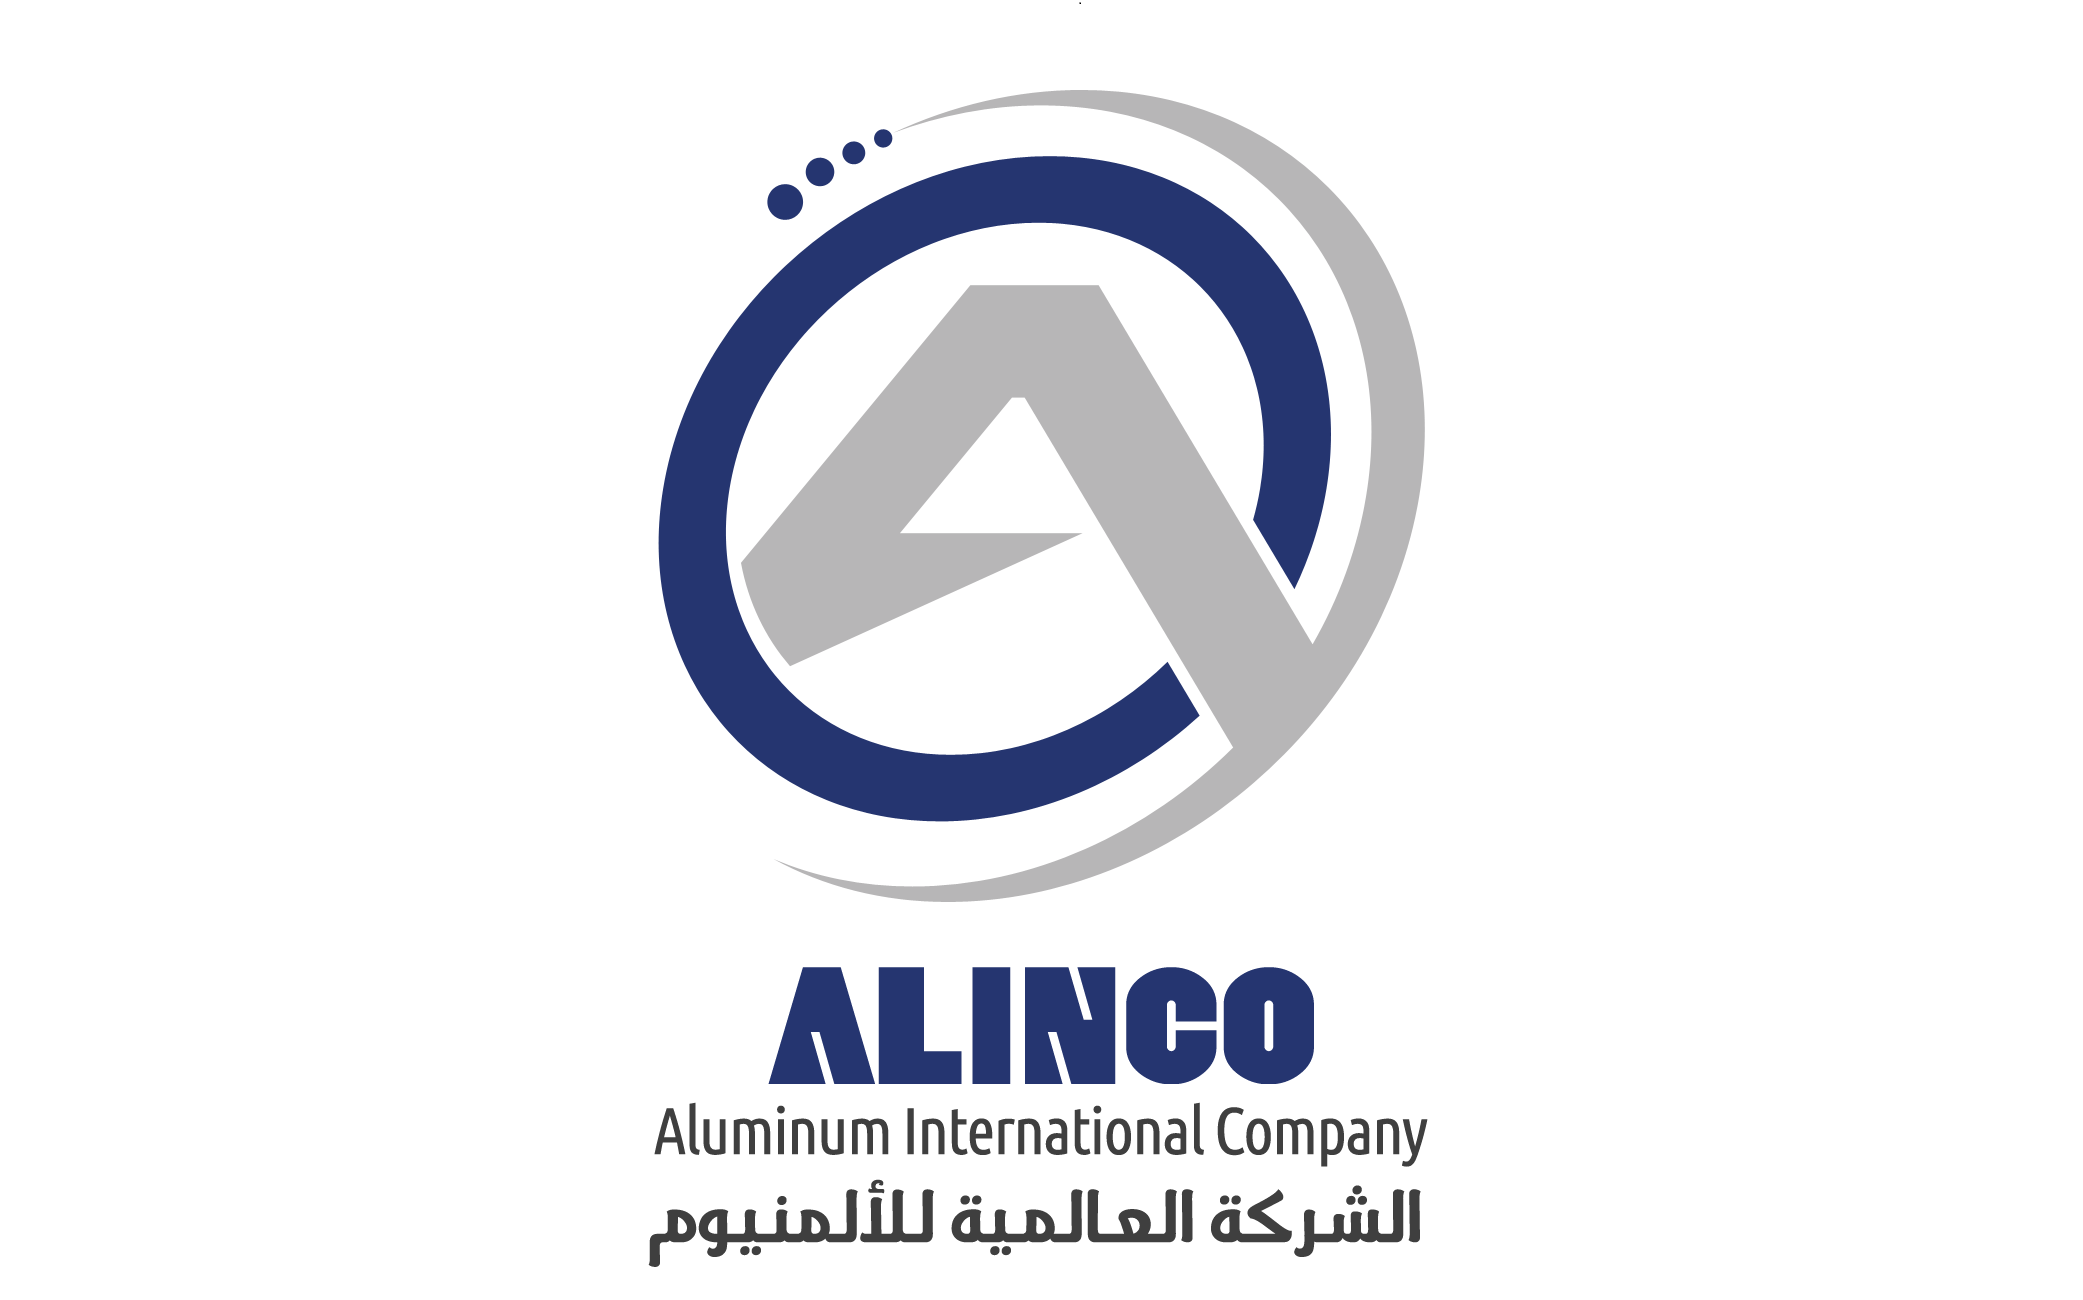 Aluminum Company Logo - Aluminum International Co